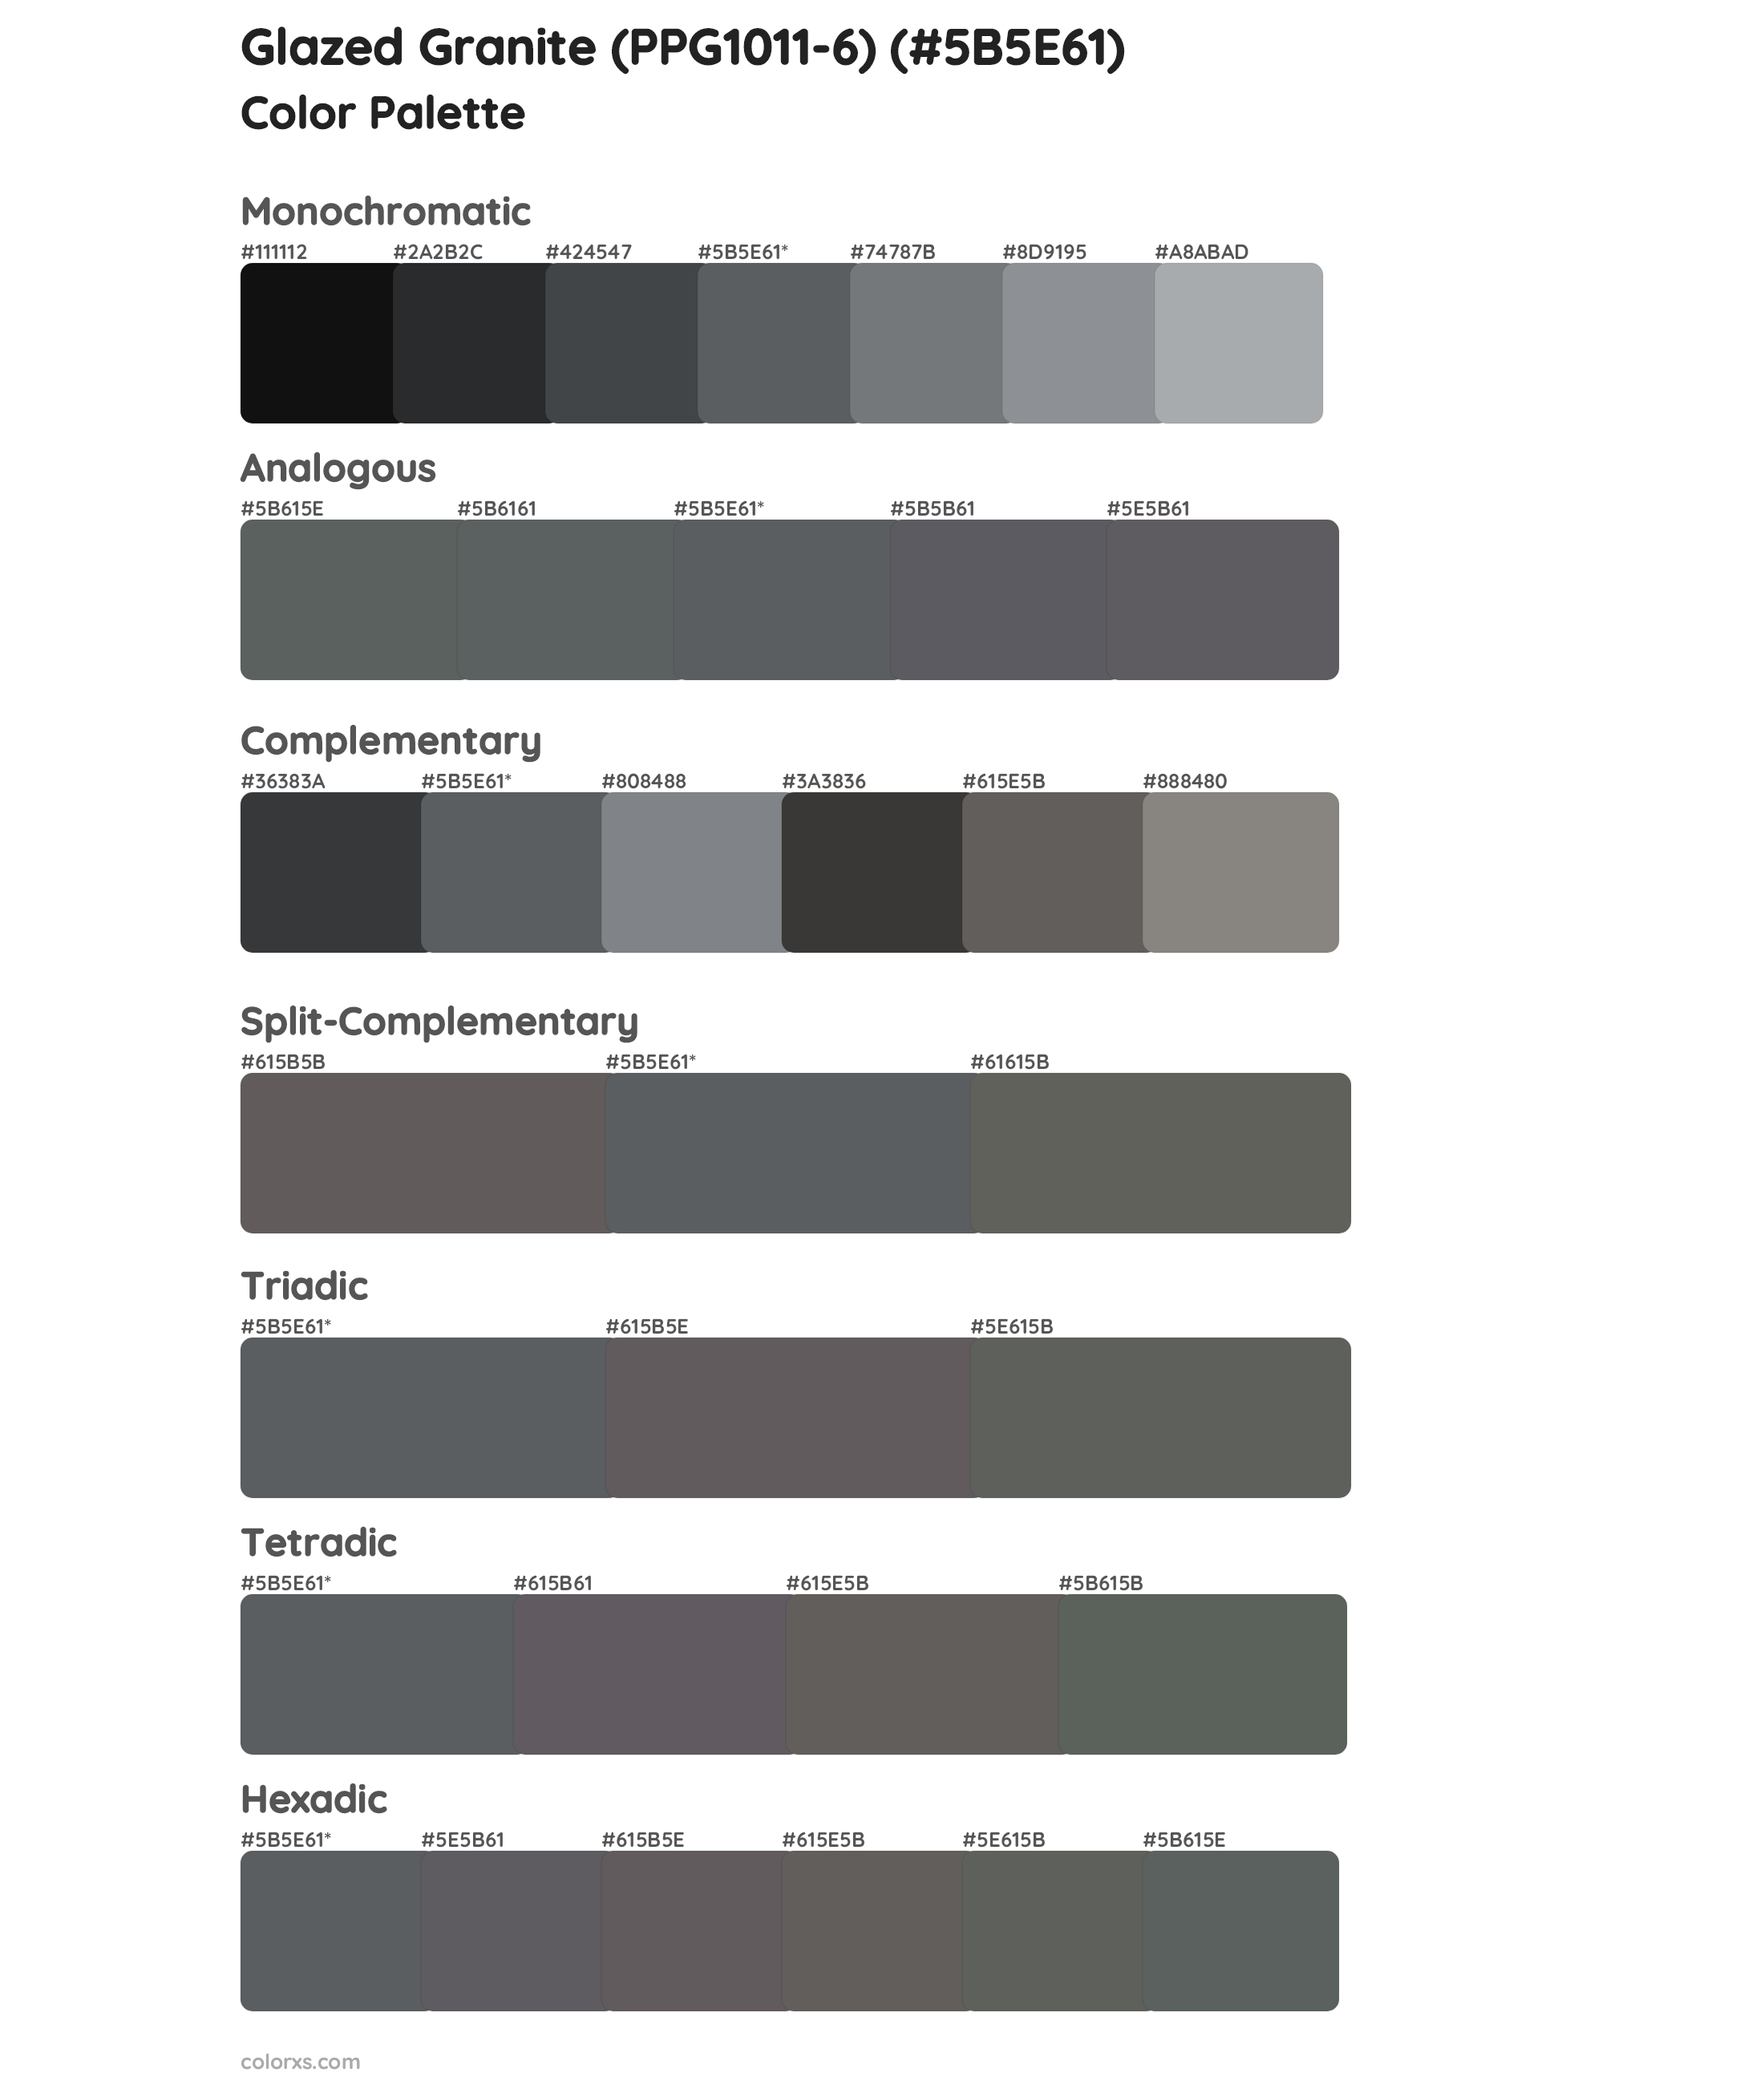 Glazed Granite (PPG1011-6) Color Scheme Palettes